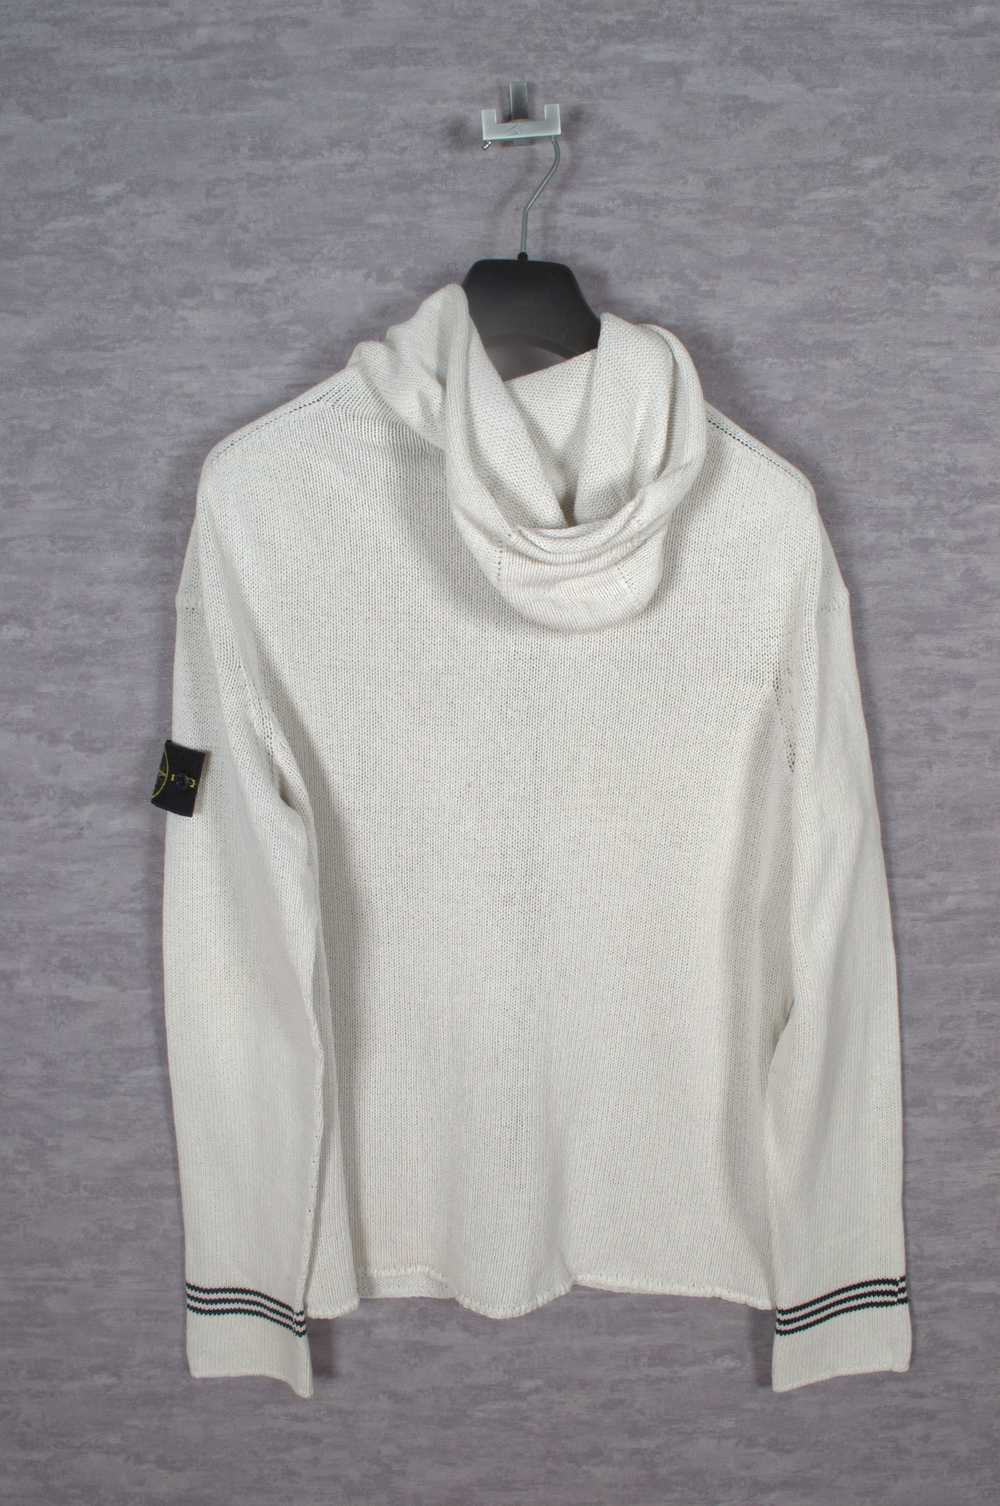 Stone Island S/S 2004 white seamless cotton hoodie - image 5